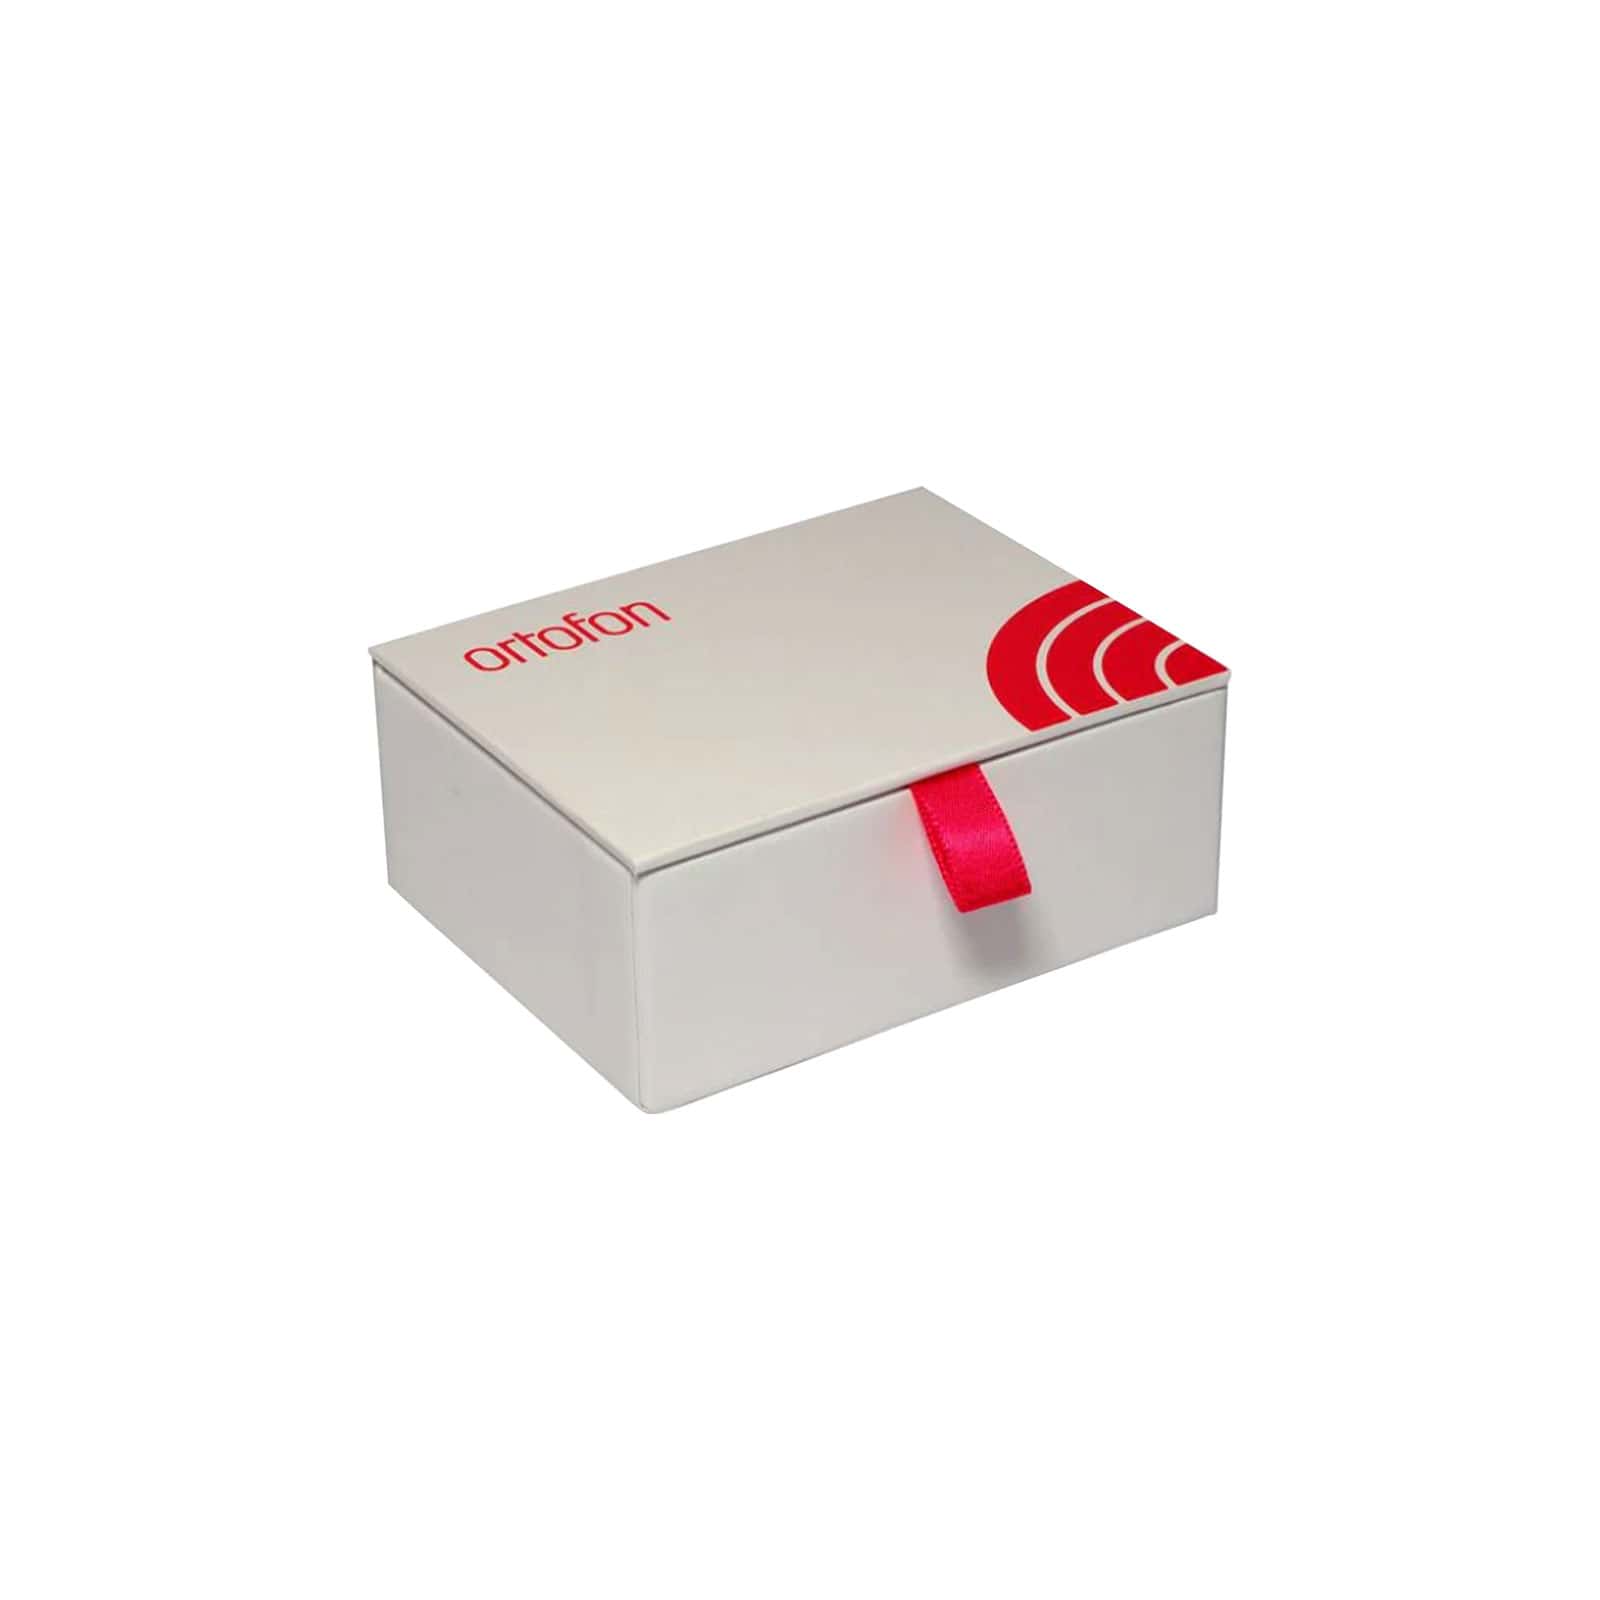 ORTOFON HIFI SPU WHITE BOX FOR SPU N